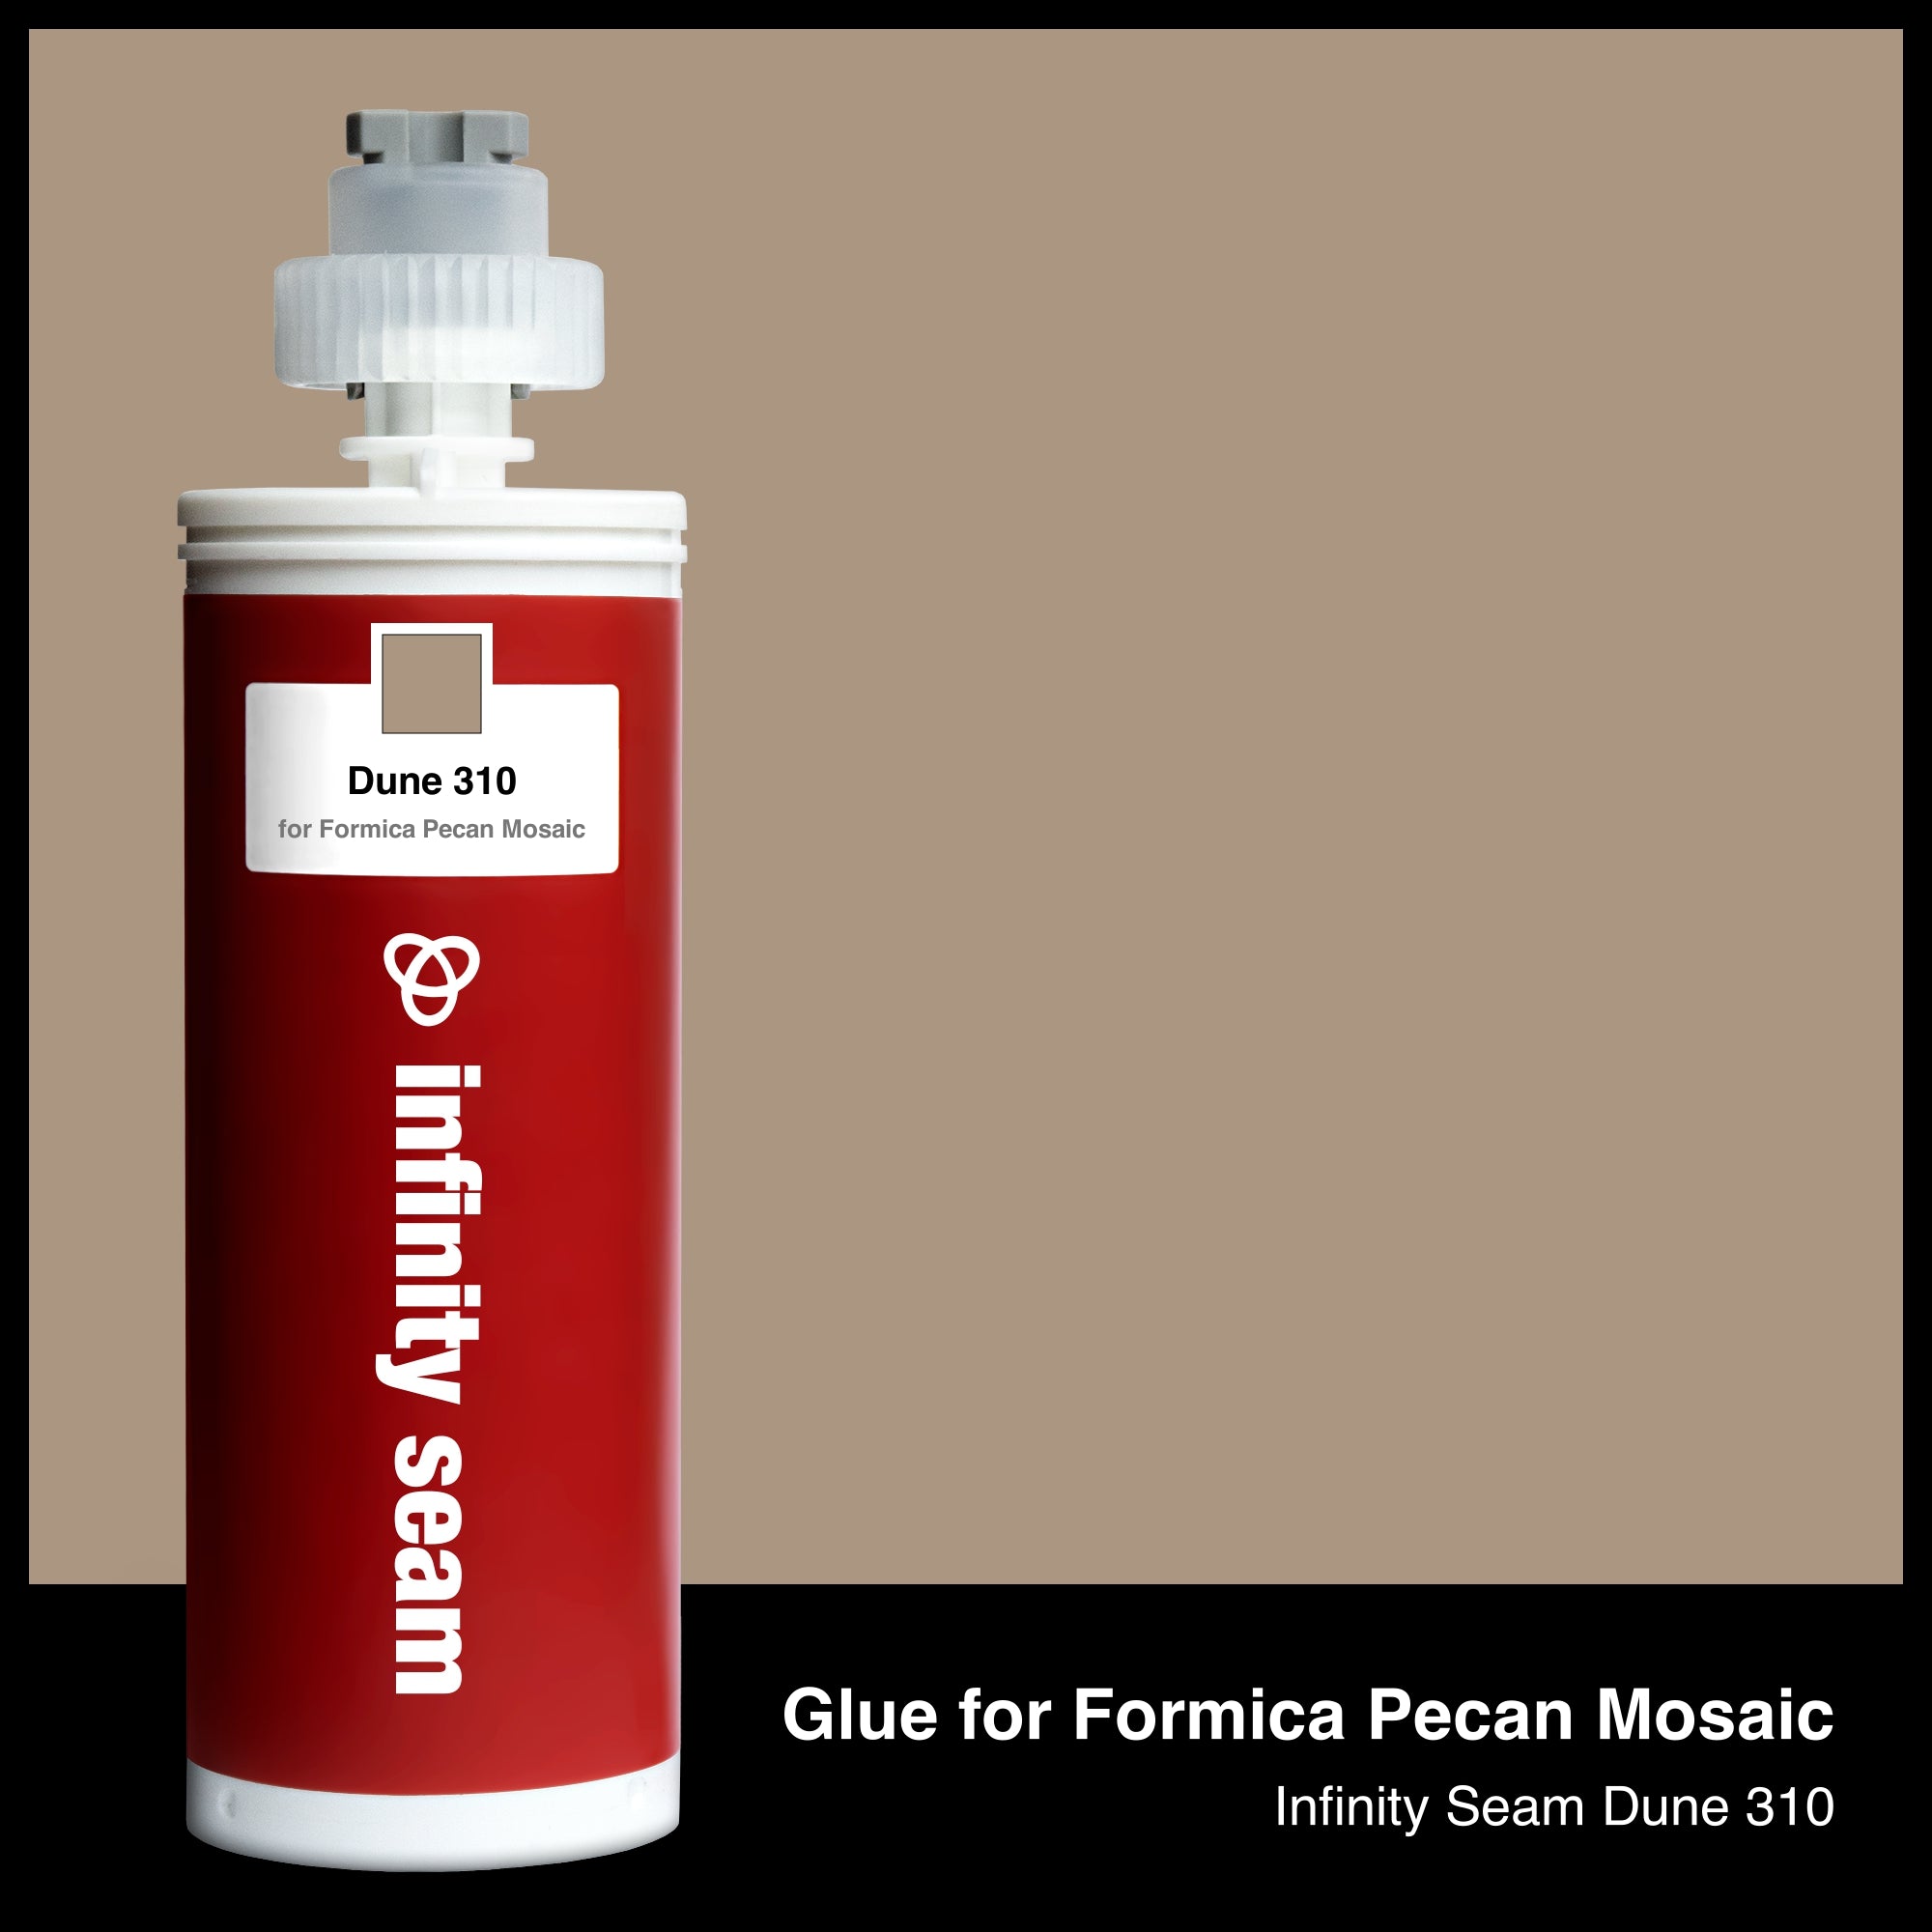 Glue for Formica Pecan Mosaic: Infinity Seam Dune 310